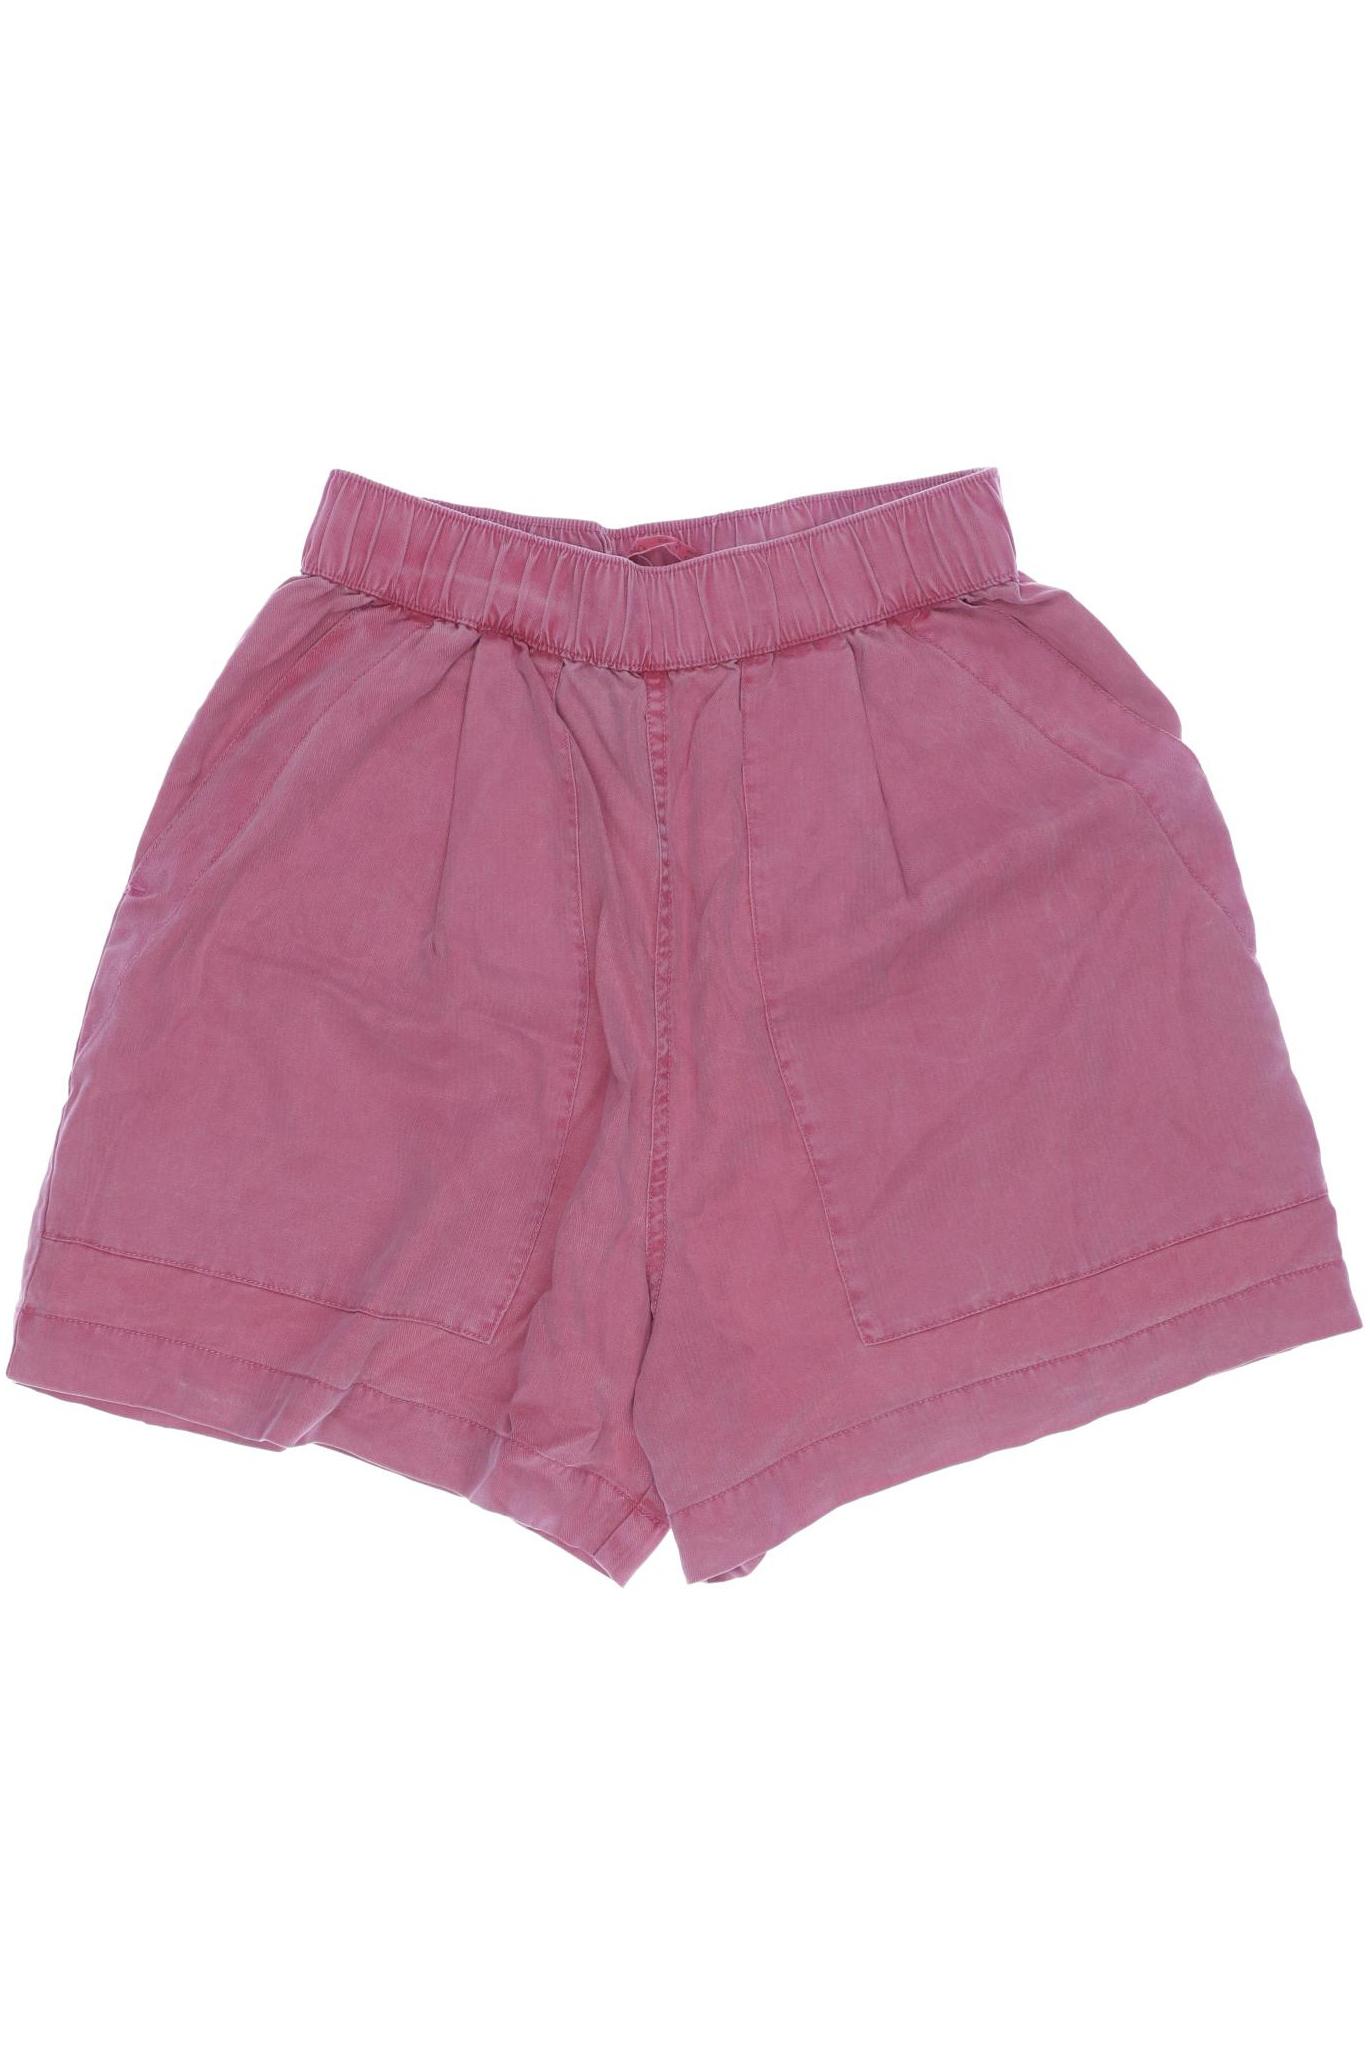 Oysho Damen Shorts, pink, Gr. 36 von Oysho